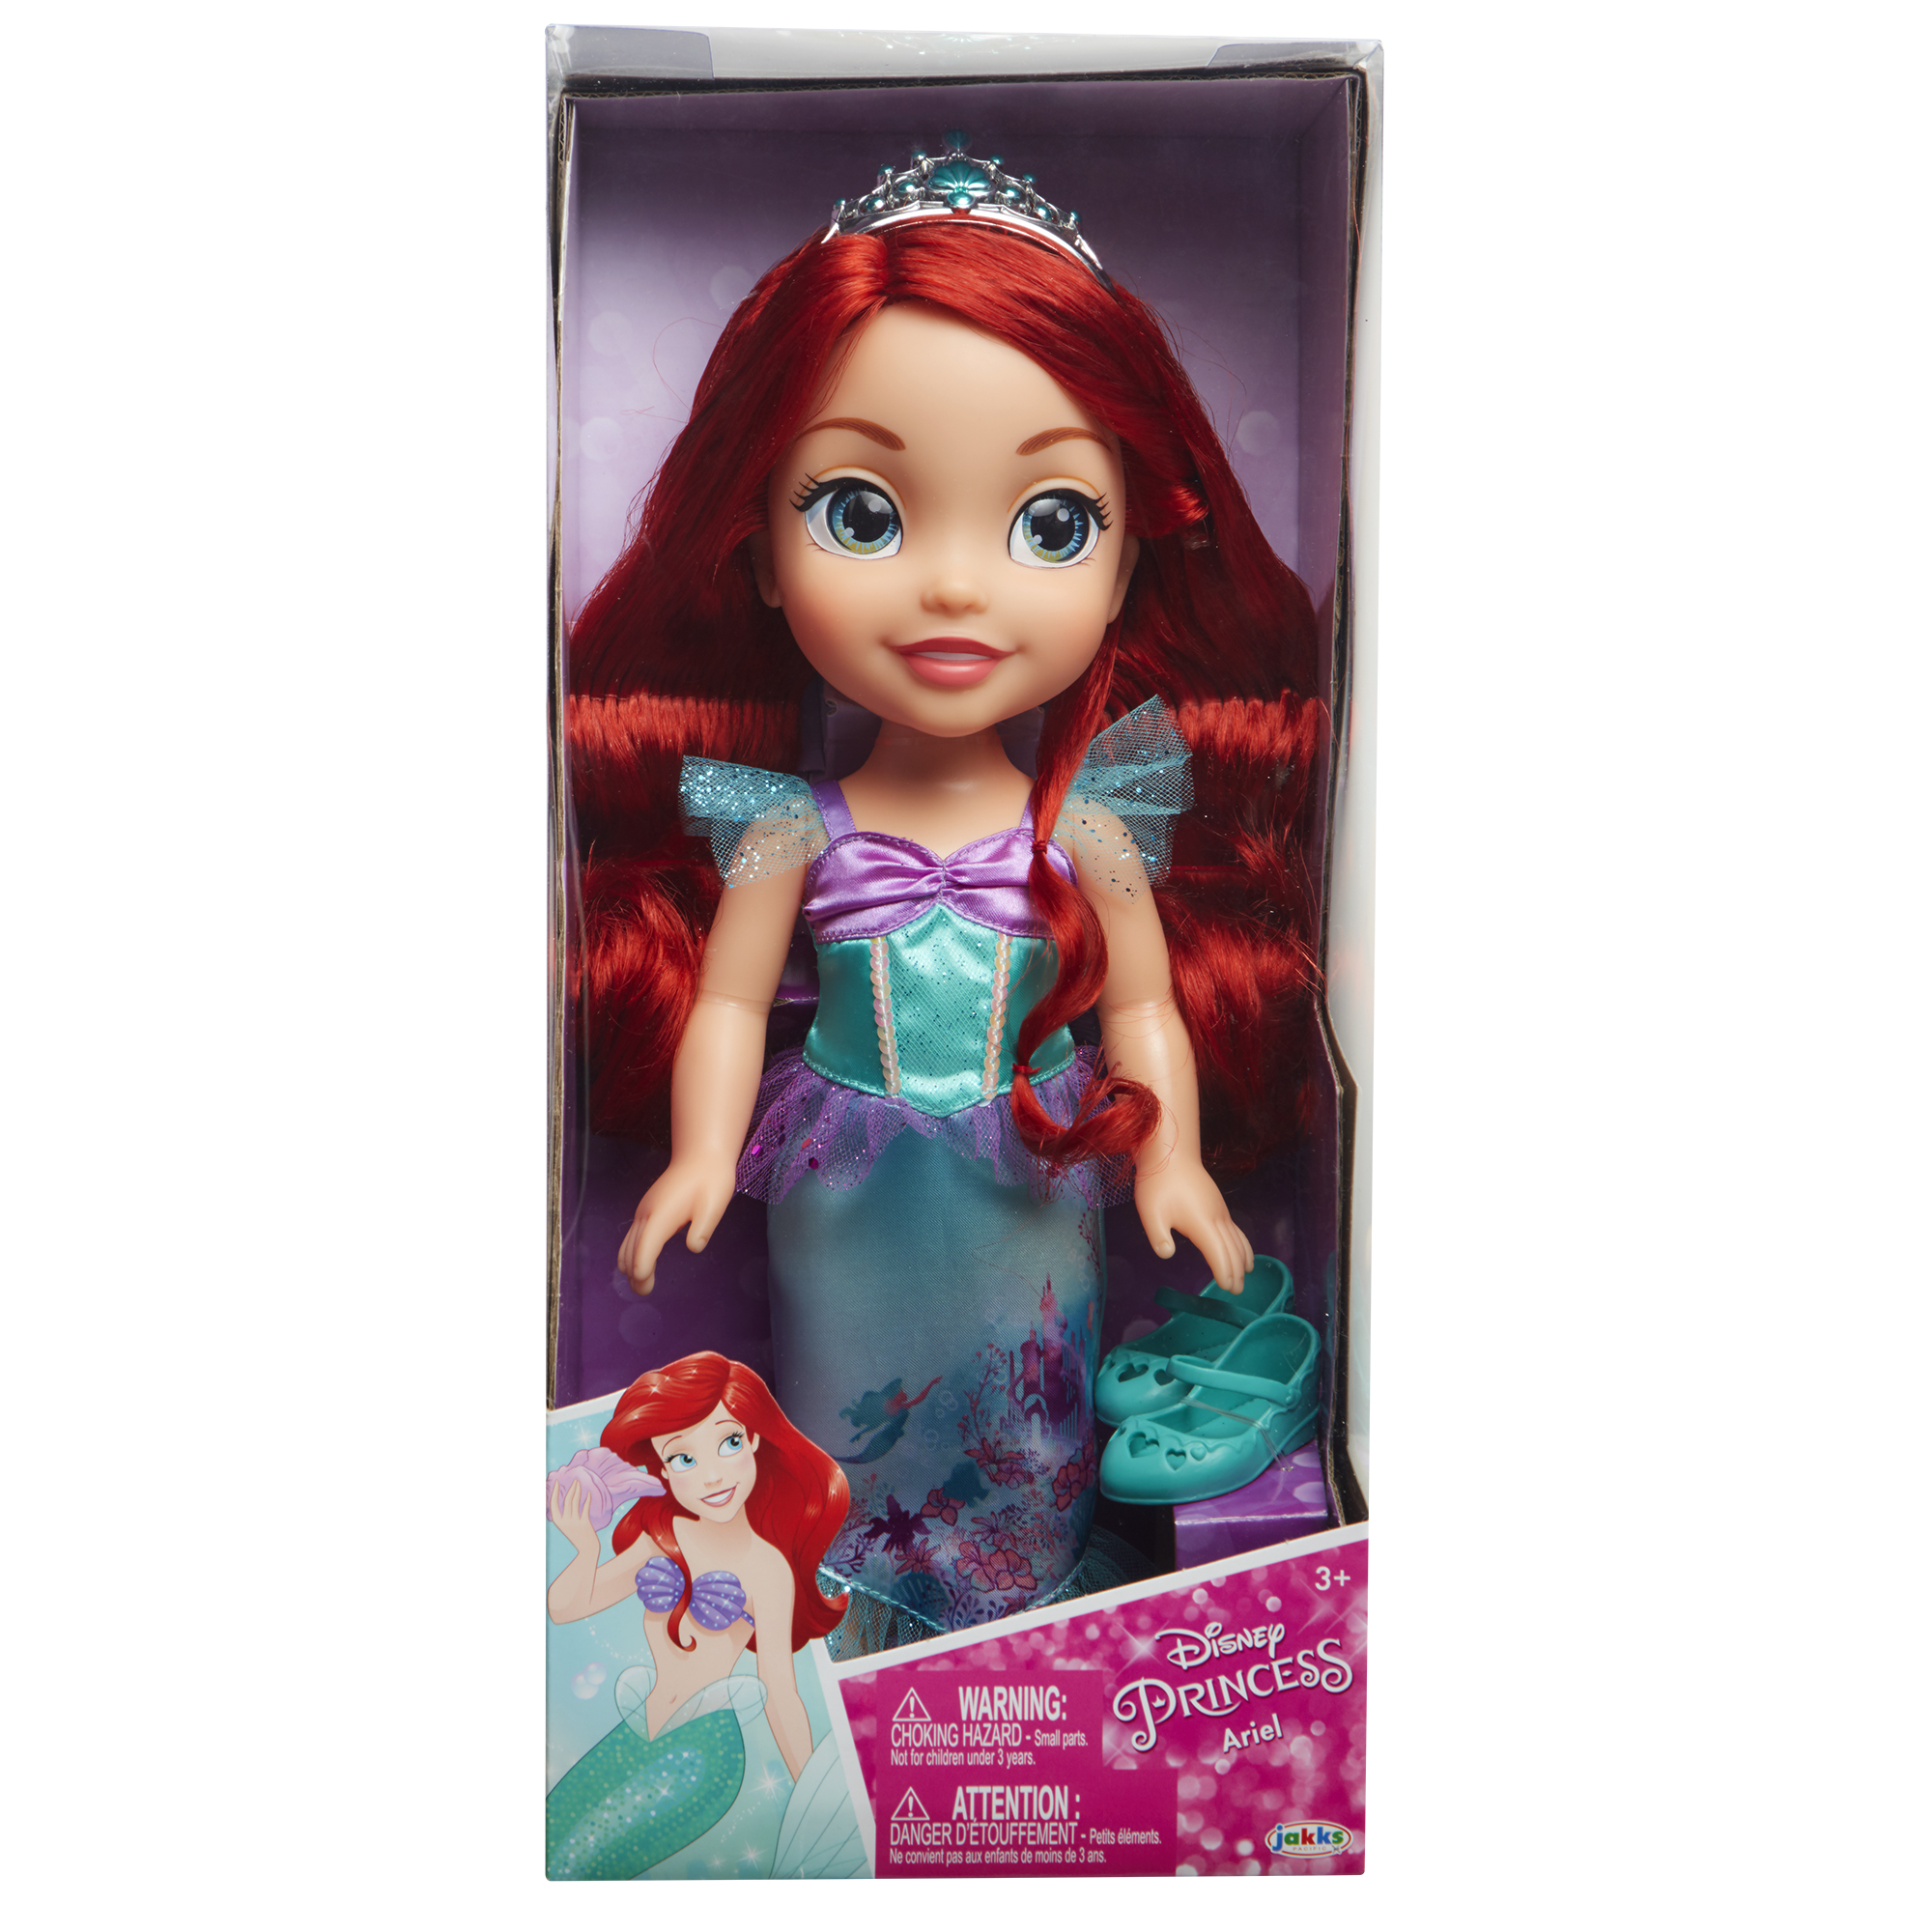 Disney Princess Explore Your World Ariel Large Fashion Doll - image 3 of 6